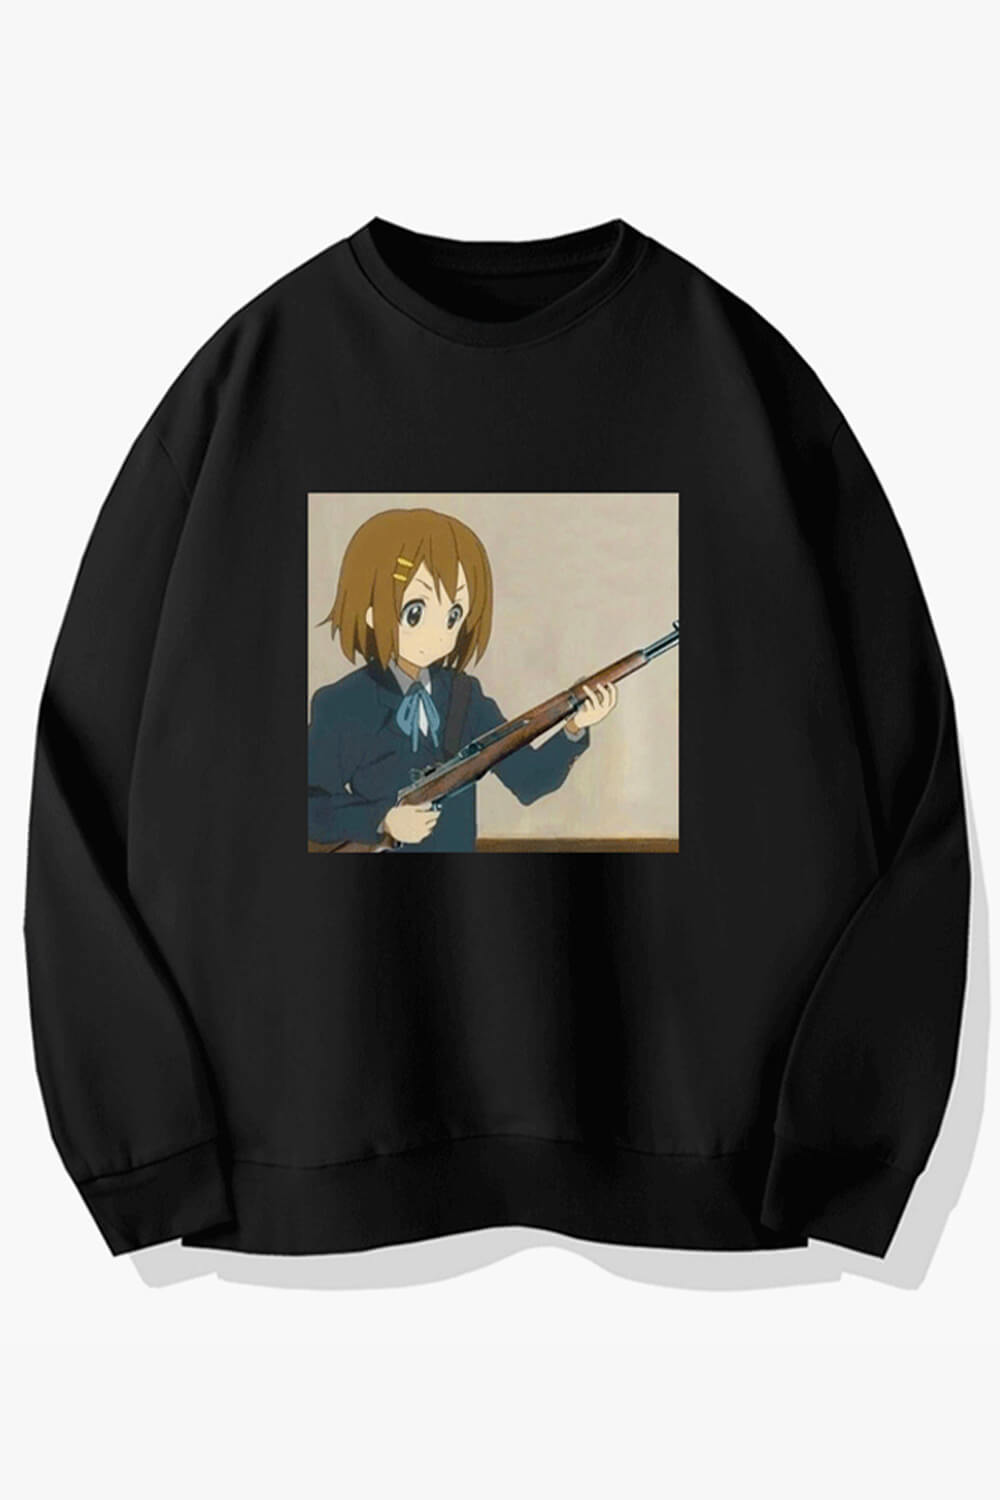 K-On Yuri with Rifle Anime Sweatshirt Animecore